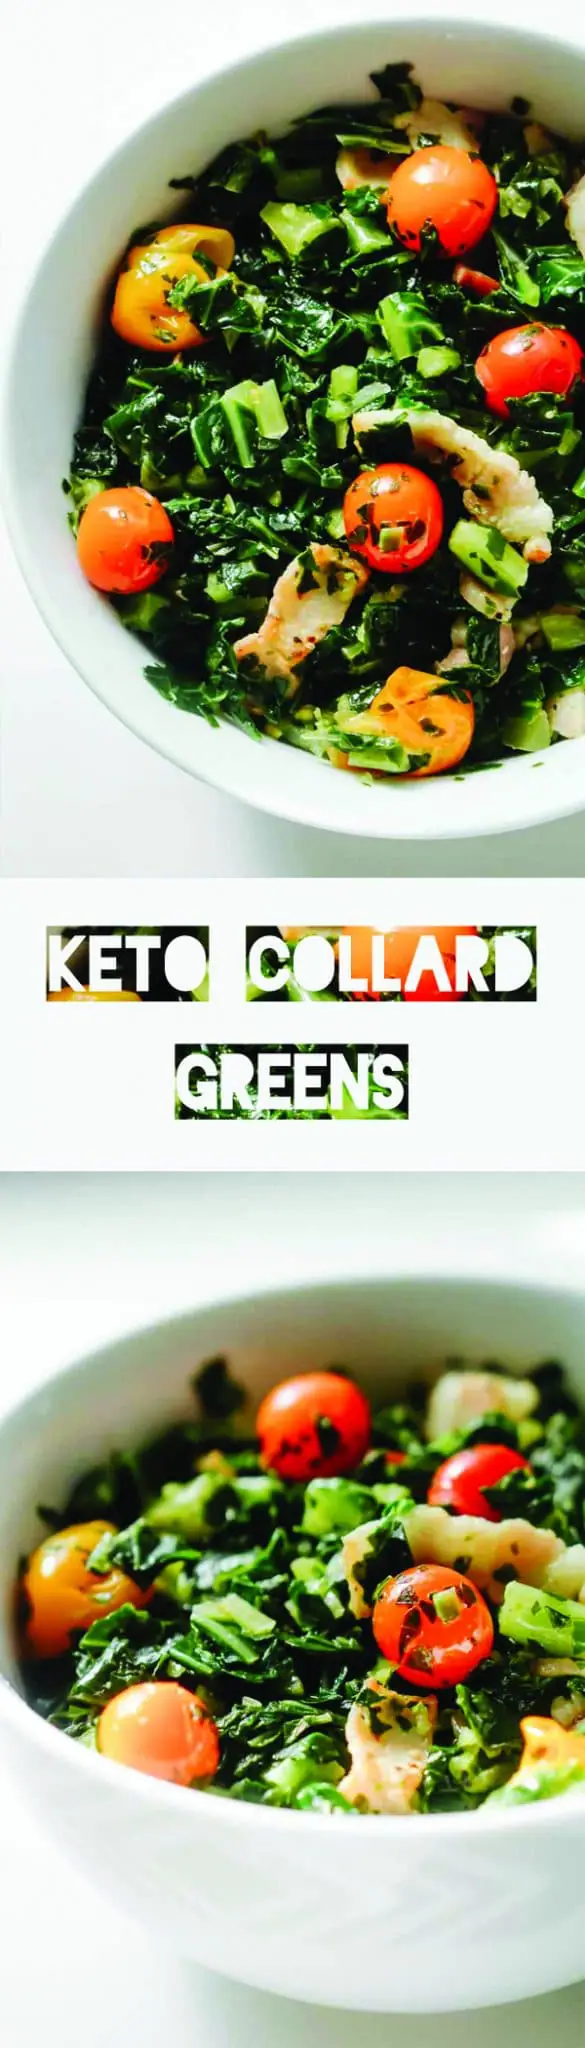 Keto Collard Greens Recipe | Keto Recipes | Low Carb Vegetables | Atkins | LCHF